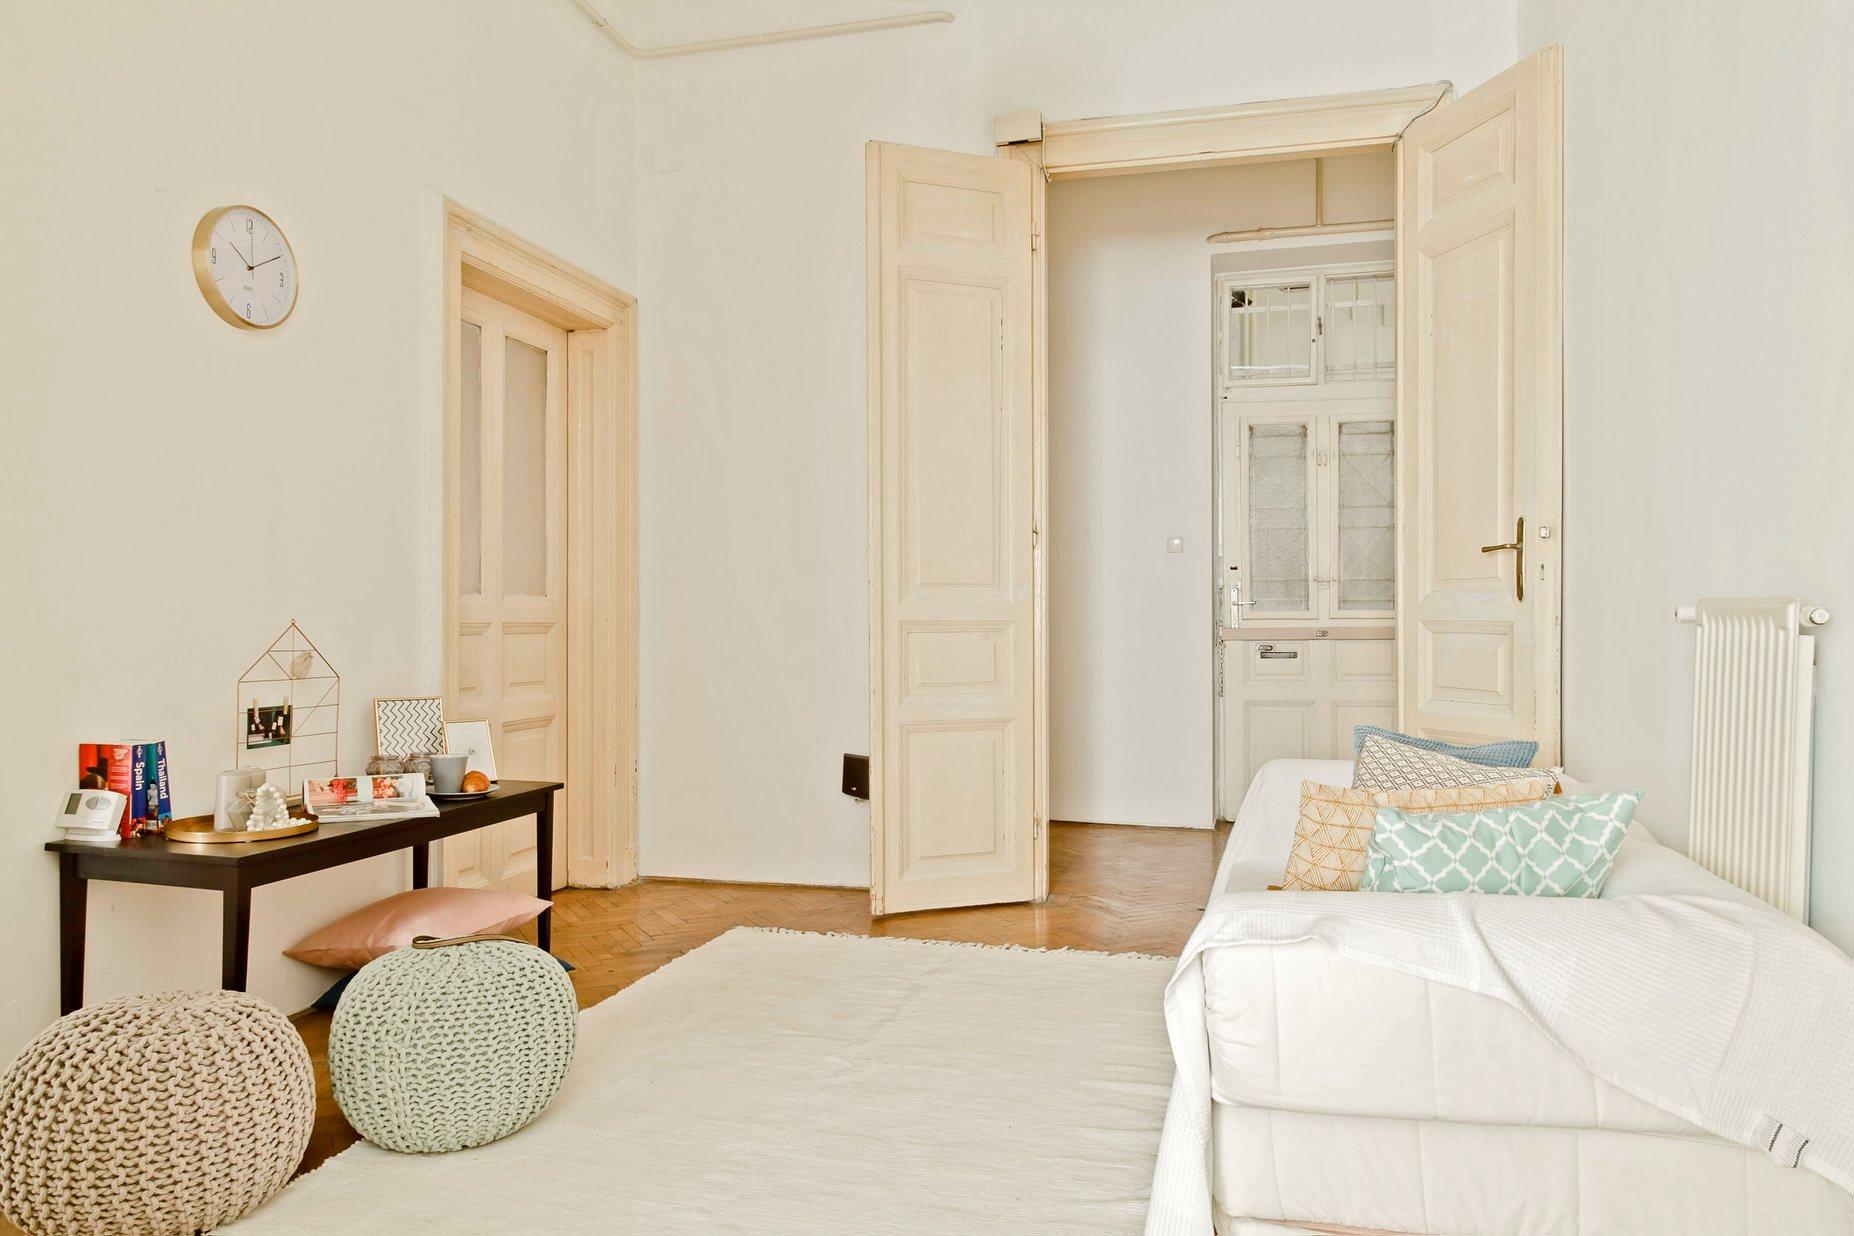 Rakoczi 2 - Private bedroom flat Budapest